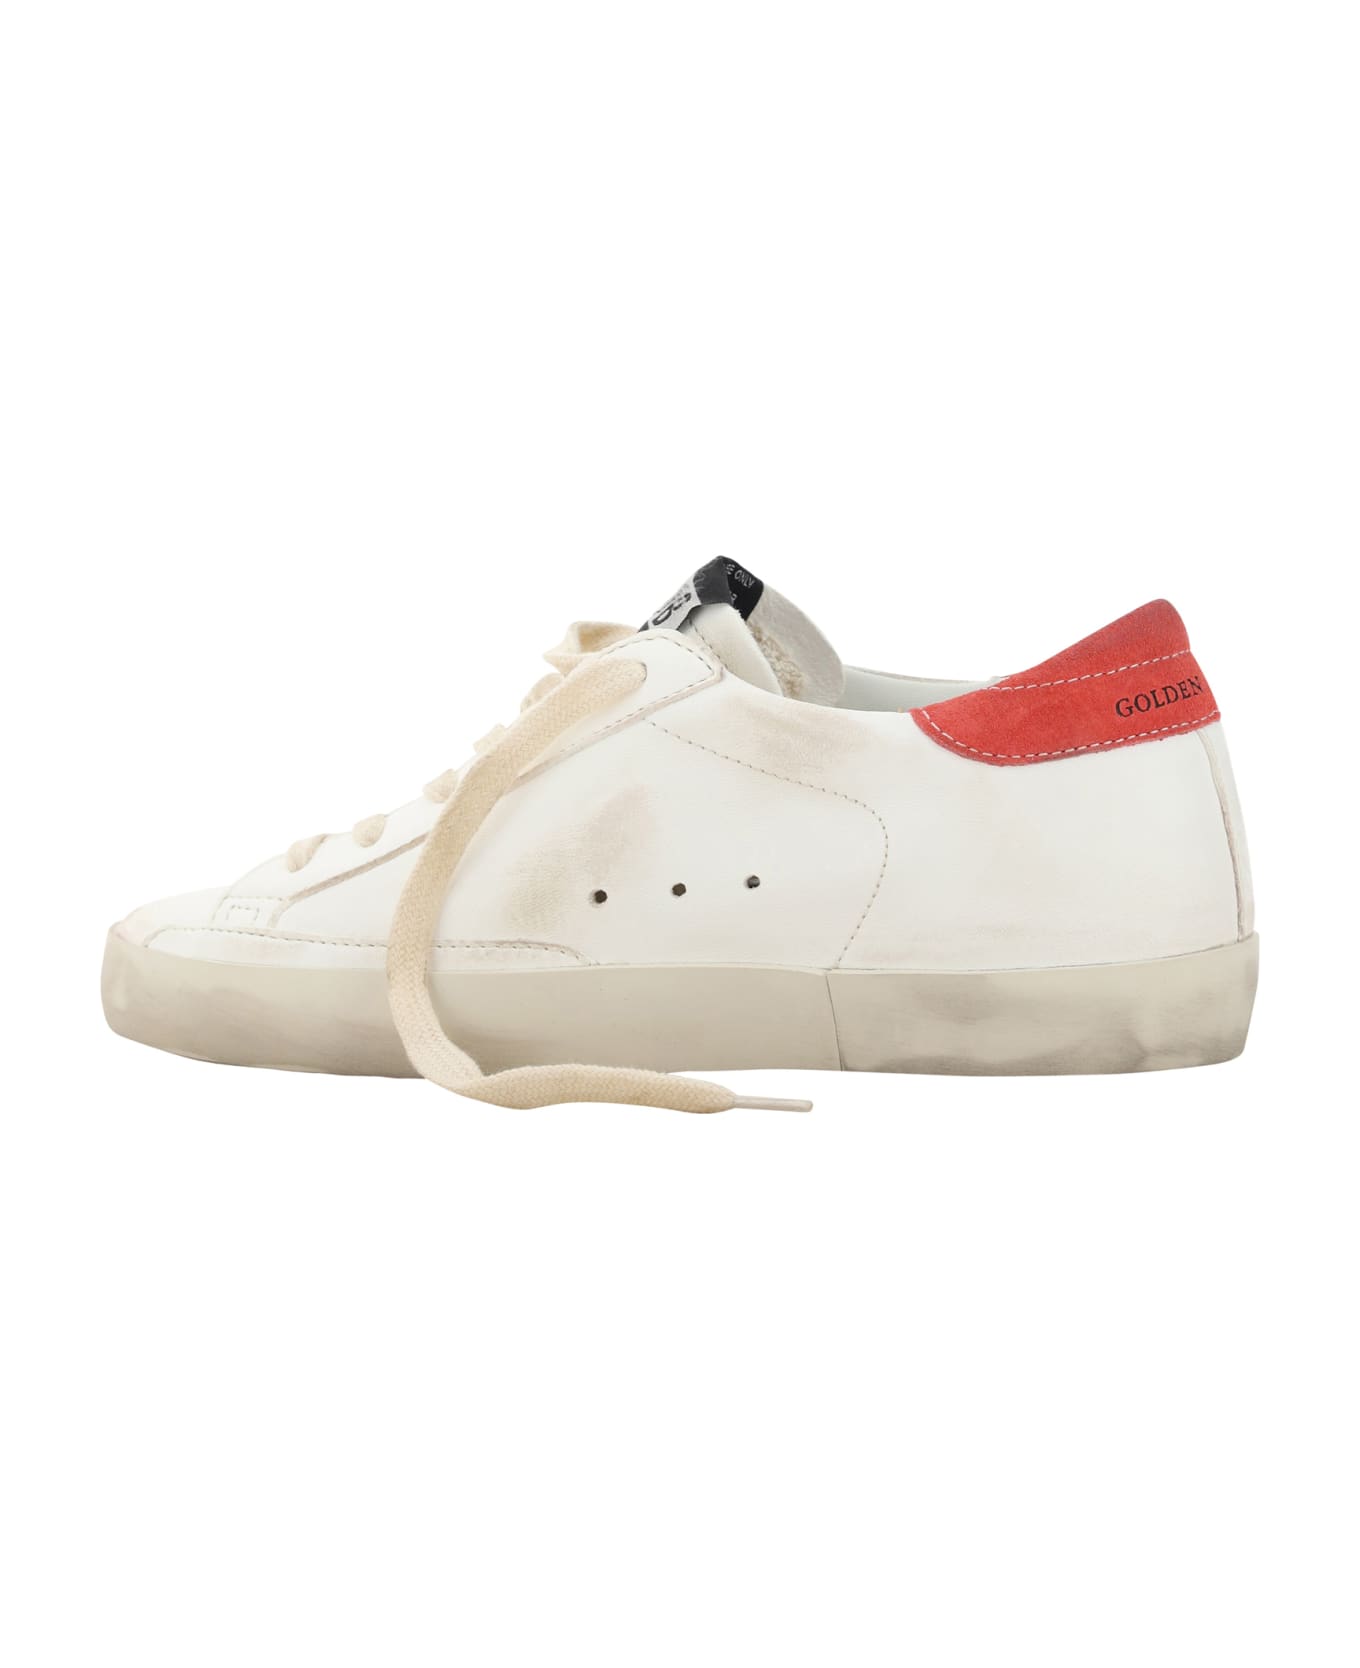 Golden Goose Superstar Classic Leather Sneakers - Cream/Fucsia